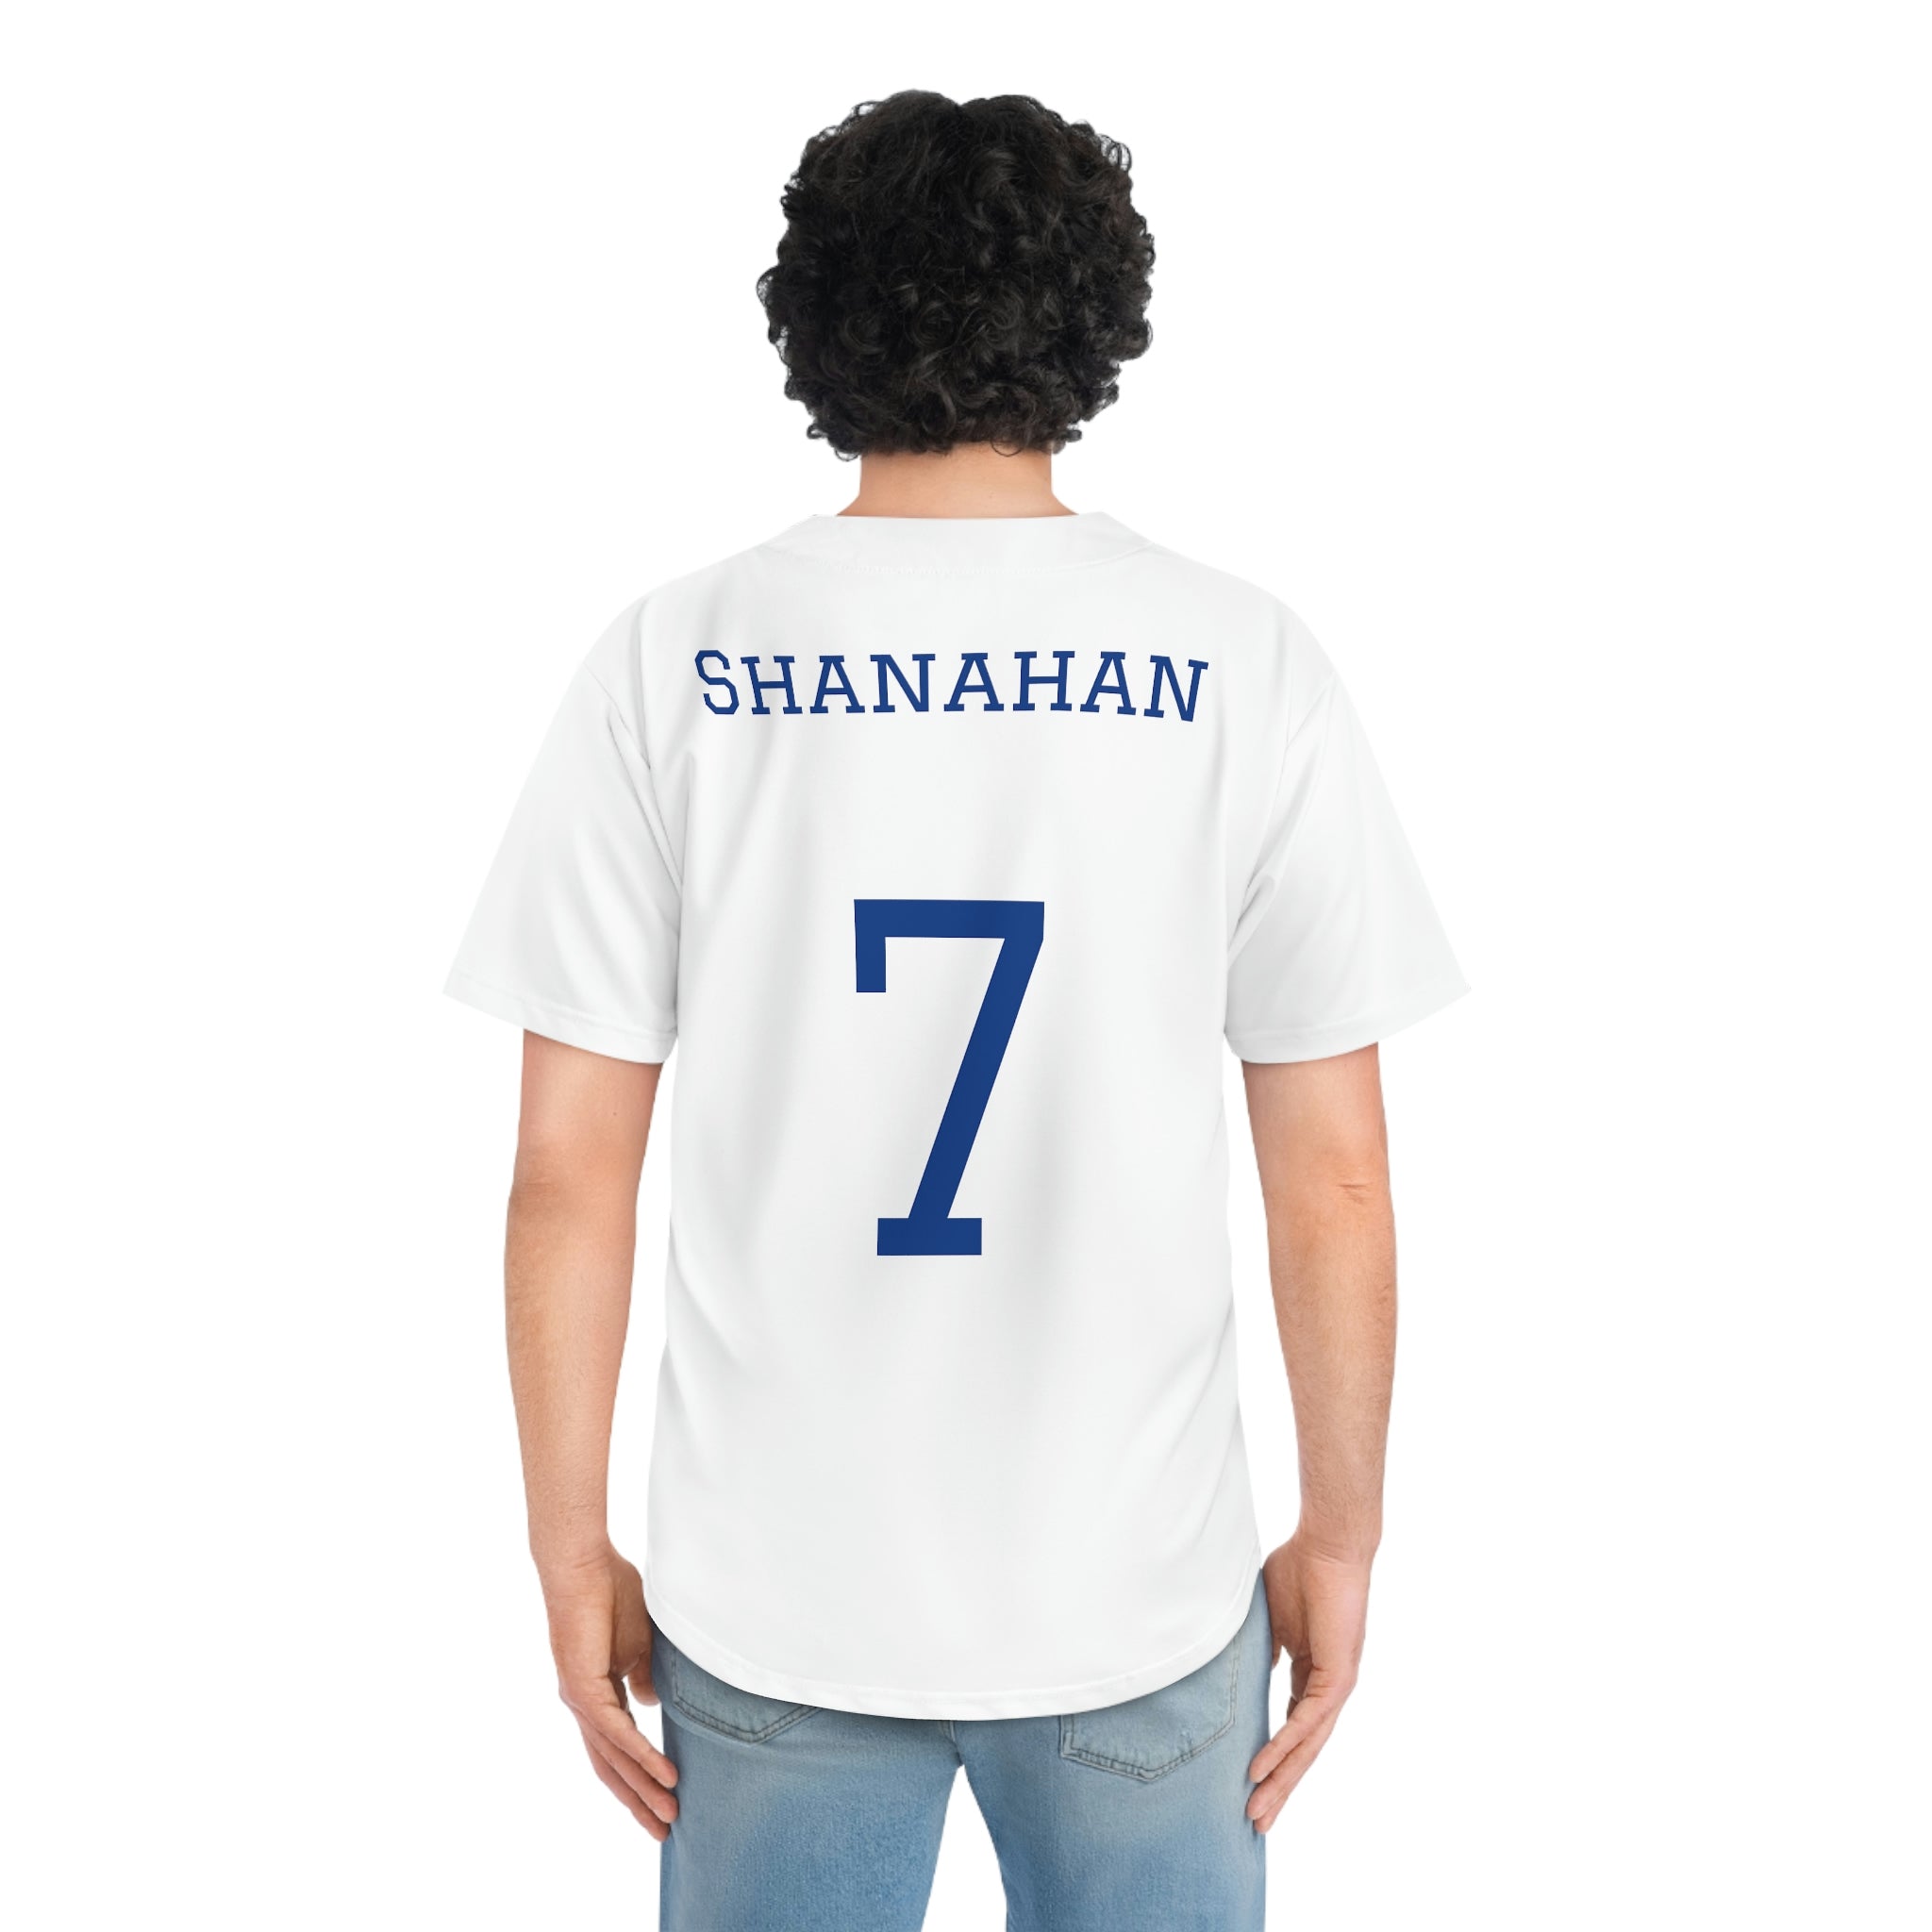 Captain Jack Shanahan Baseball Jersey